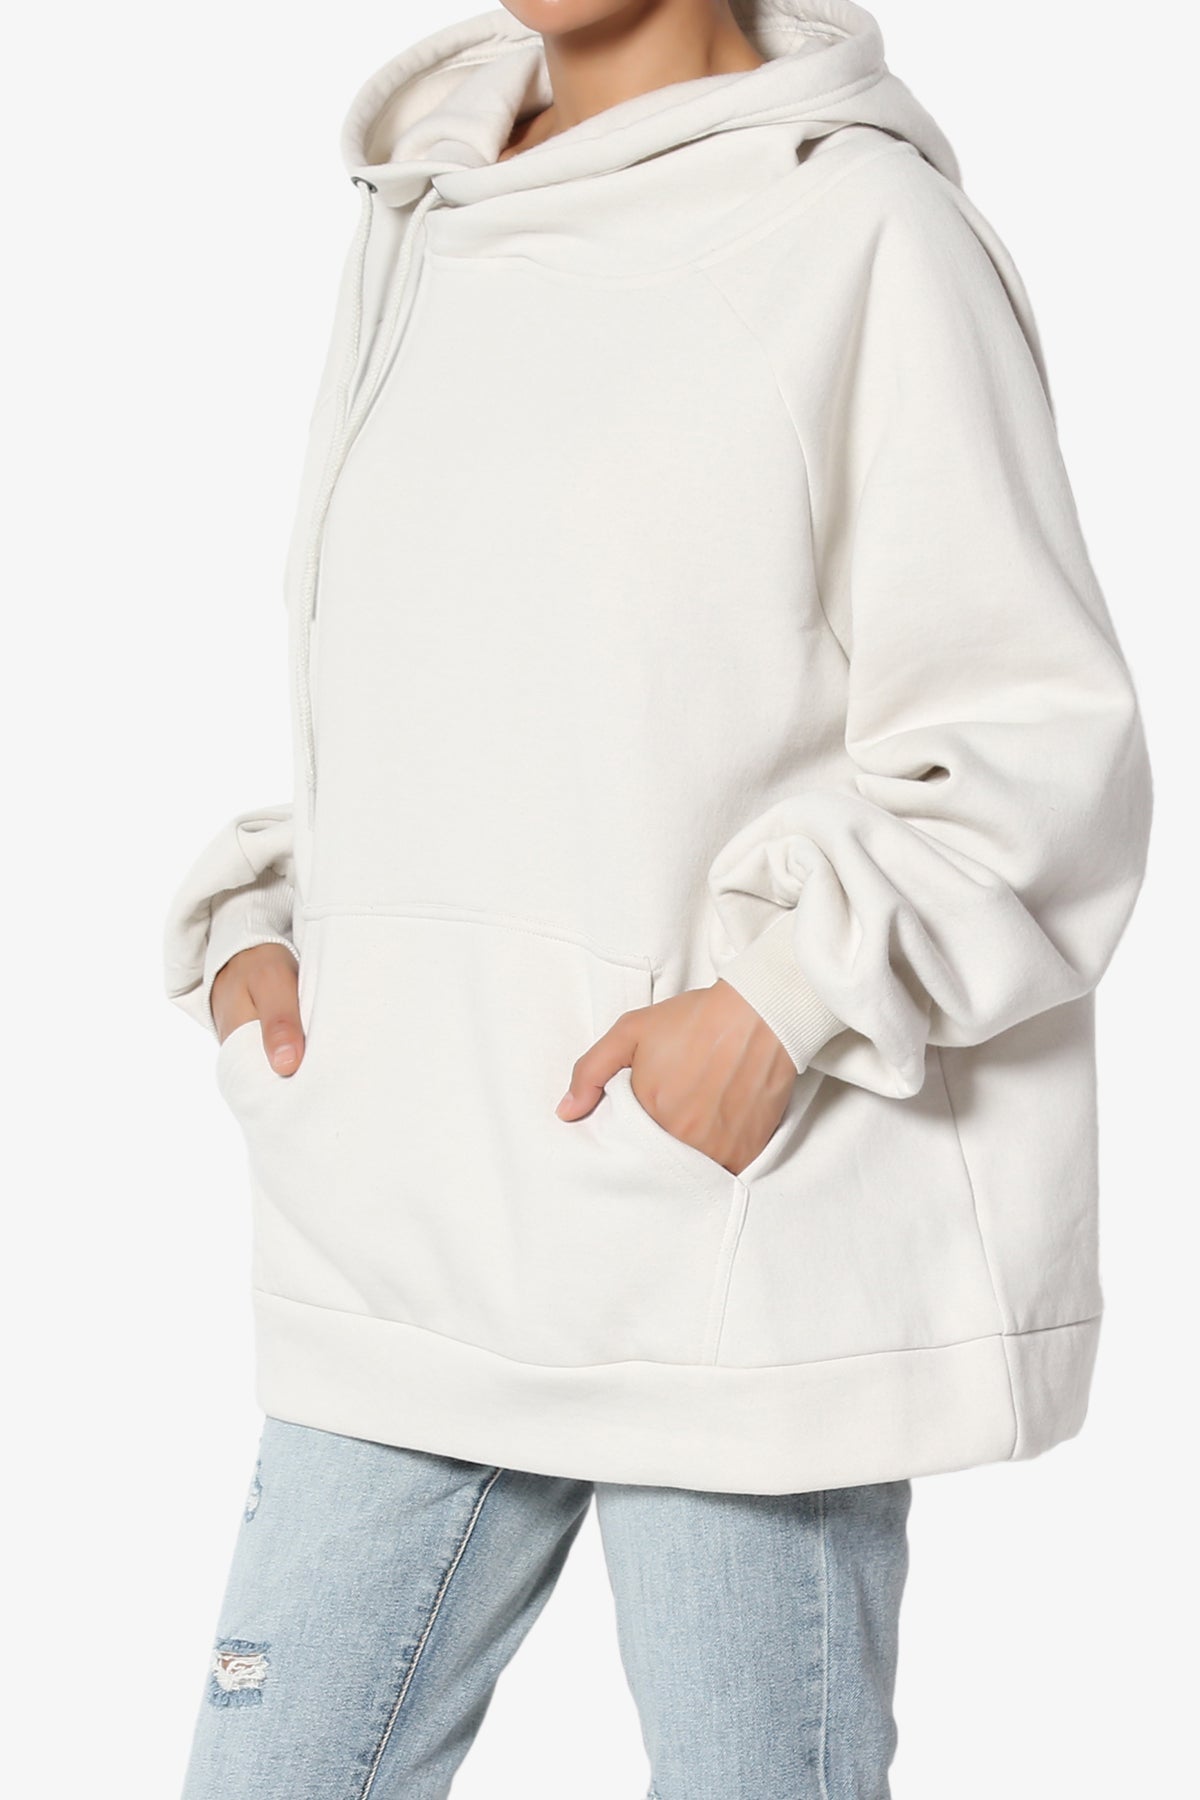 Accie Side Drawstring Hooded Sweatshirts